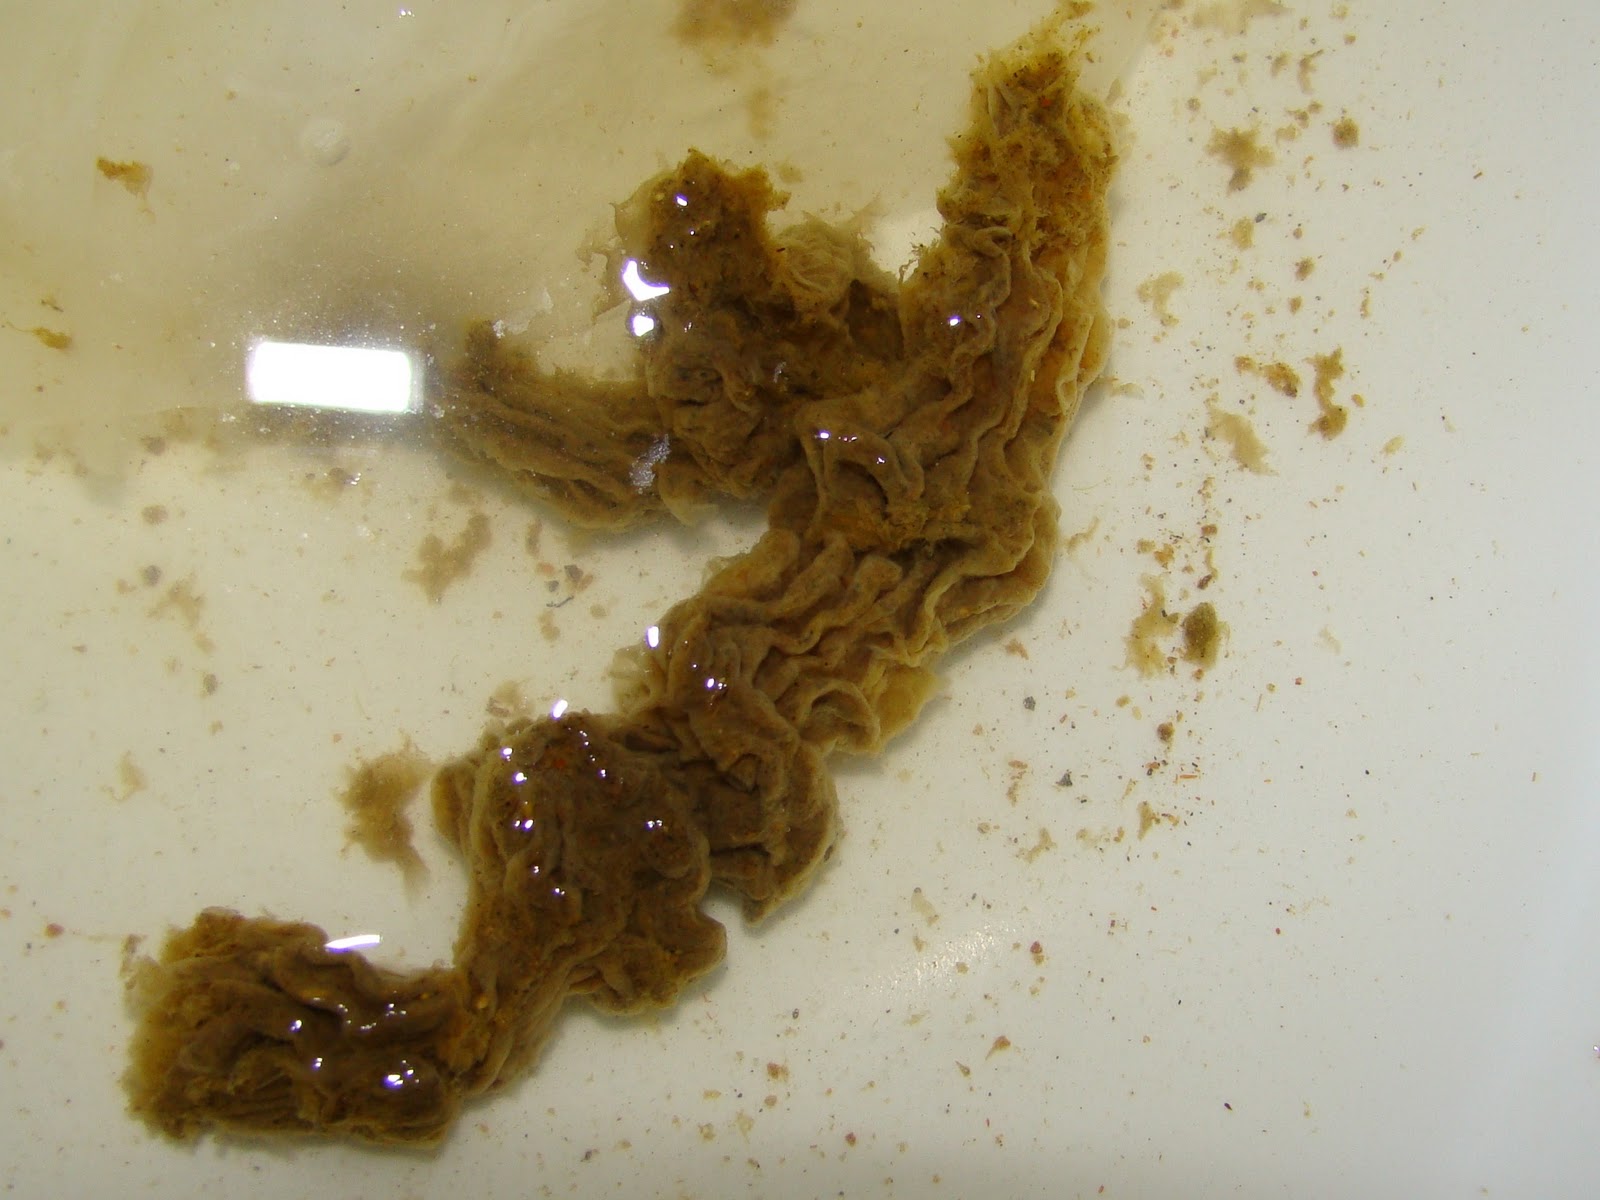 Brown Worms In Stool - Goldenacresdogs.com